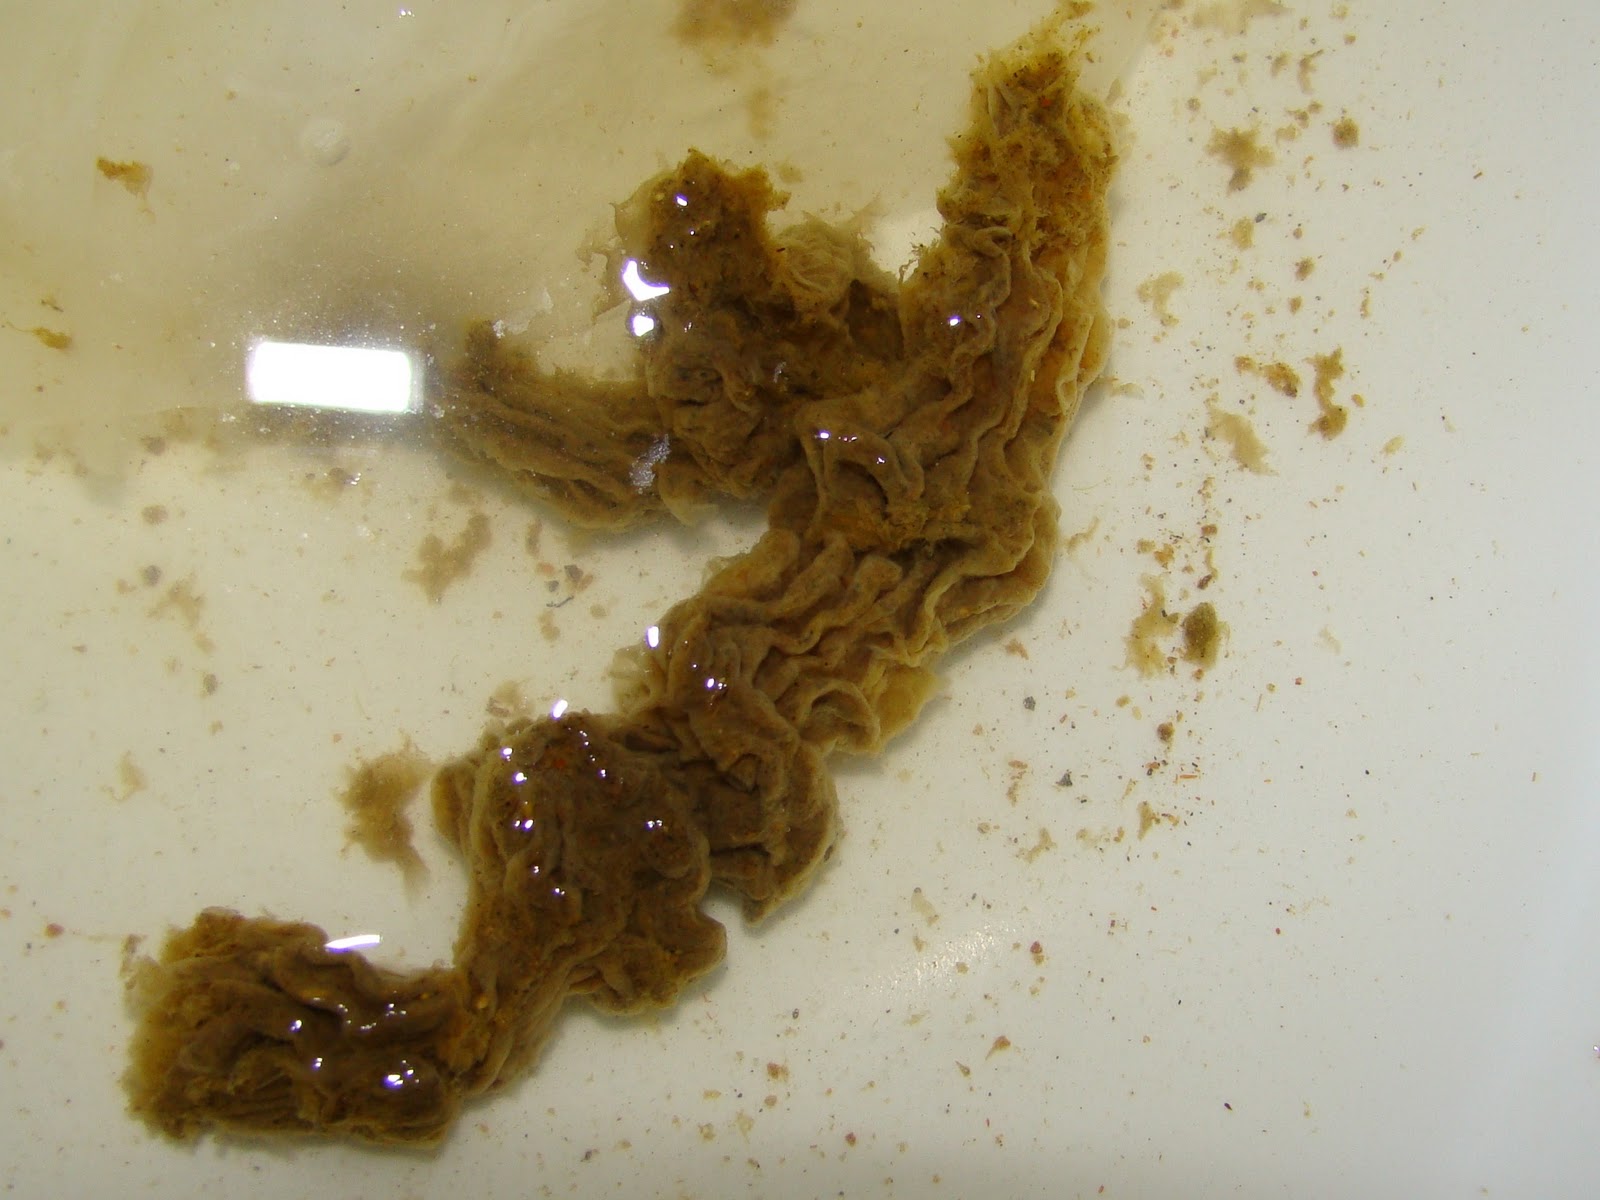 Brown Worms In Stool - Goldenacresdogs.com